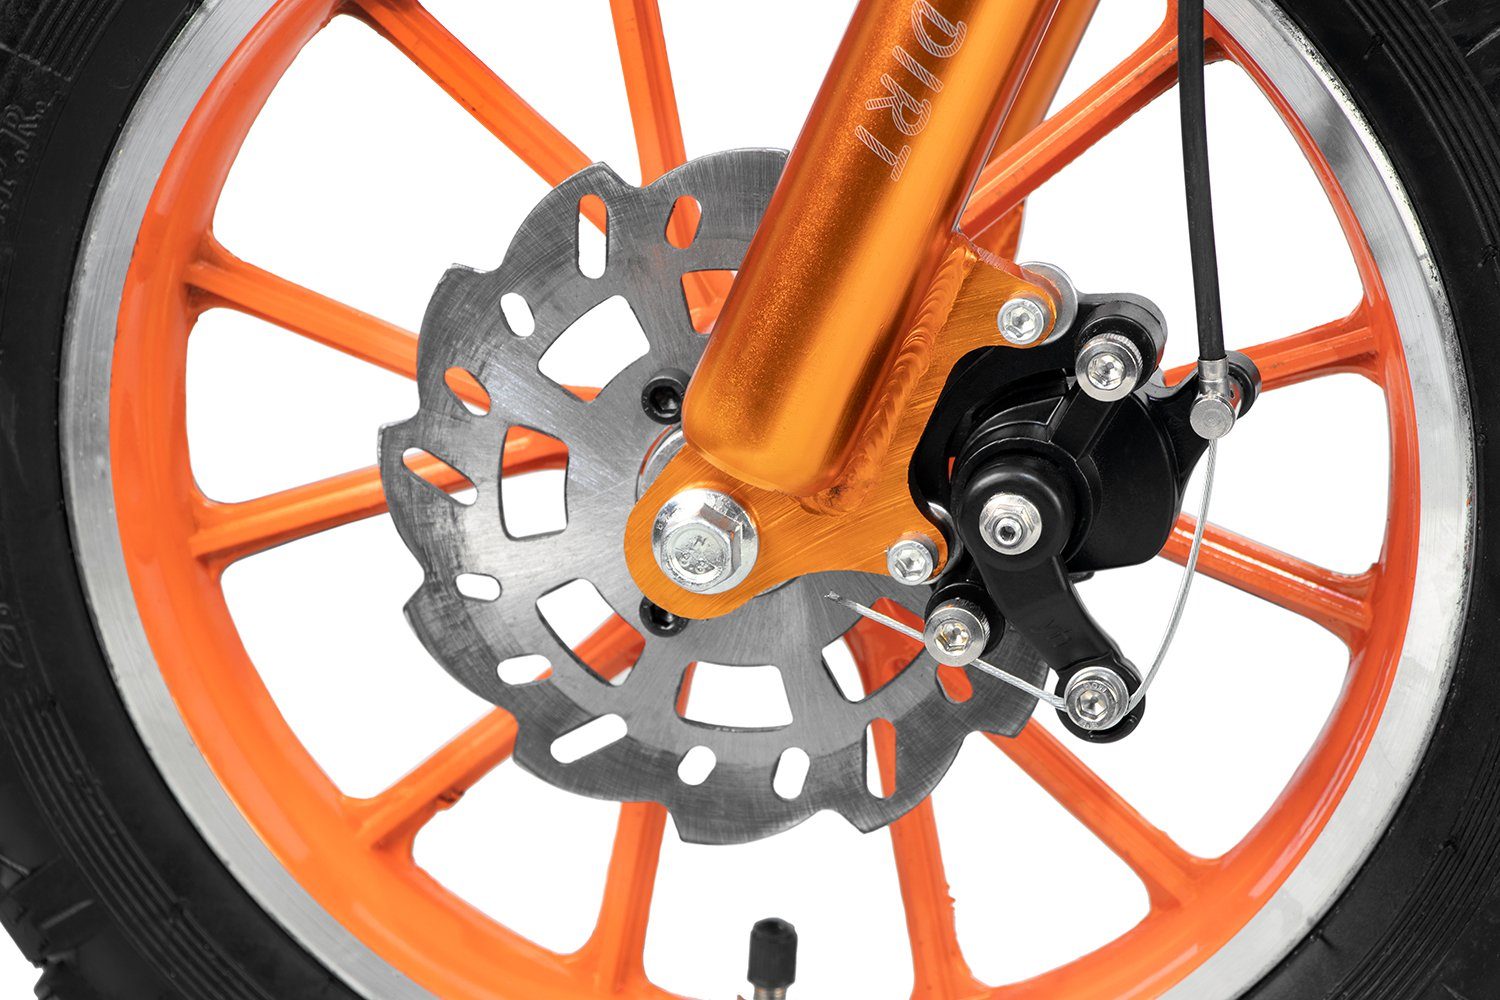 Pullstart Orange Apollo 49cc 10 Dirt-Bike Nitro Dirtbike Crossbike Zoll Motors Smarty